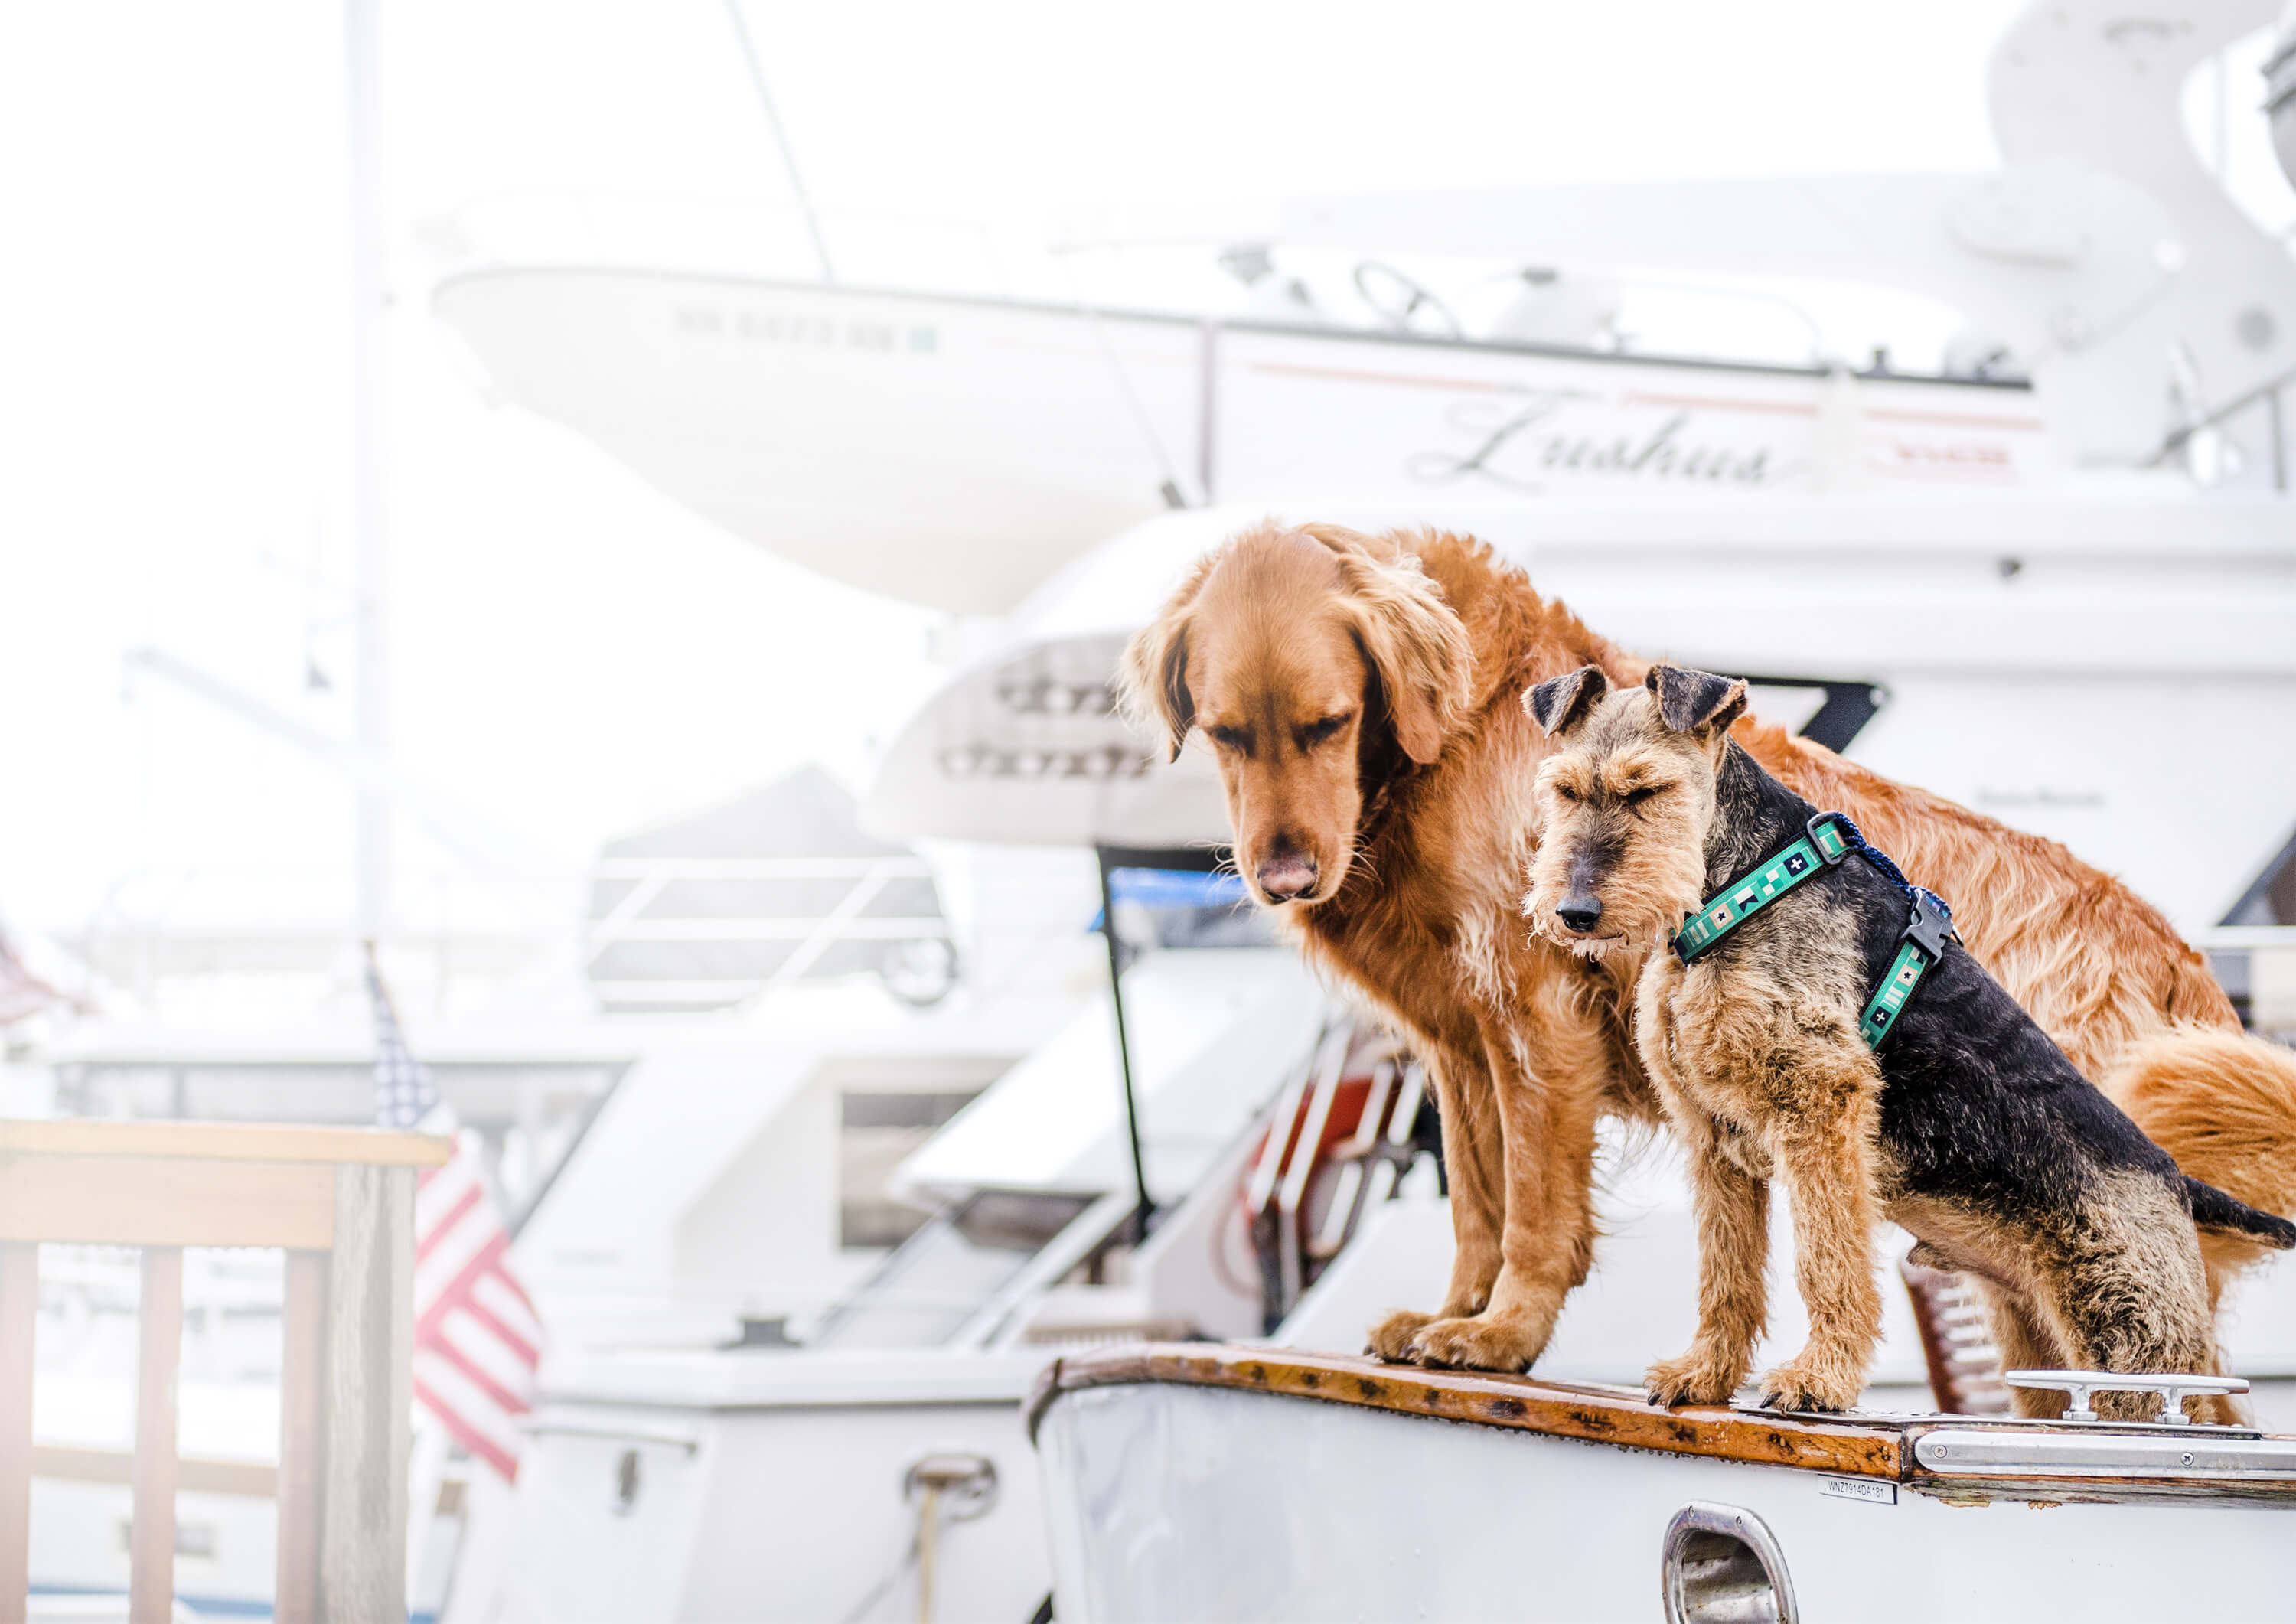 Two dogs on boat wearing Nauti-dog Handmade dog collars and harness